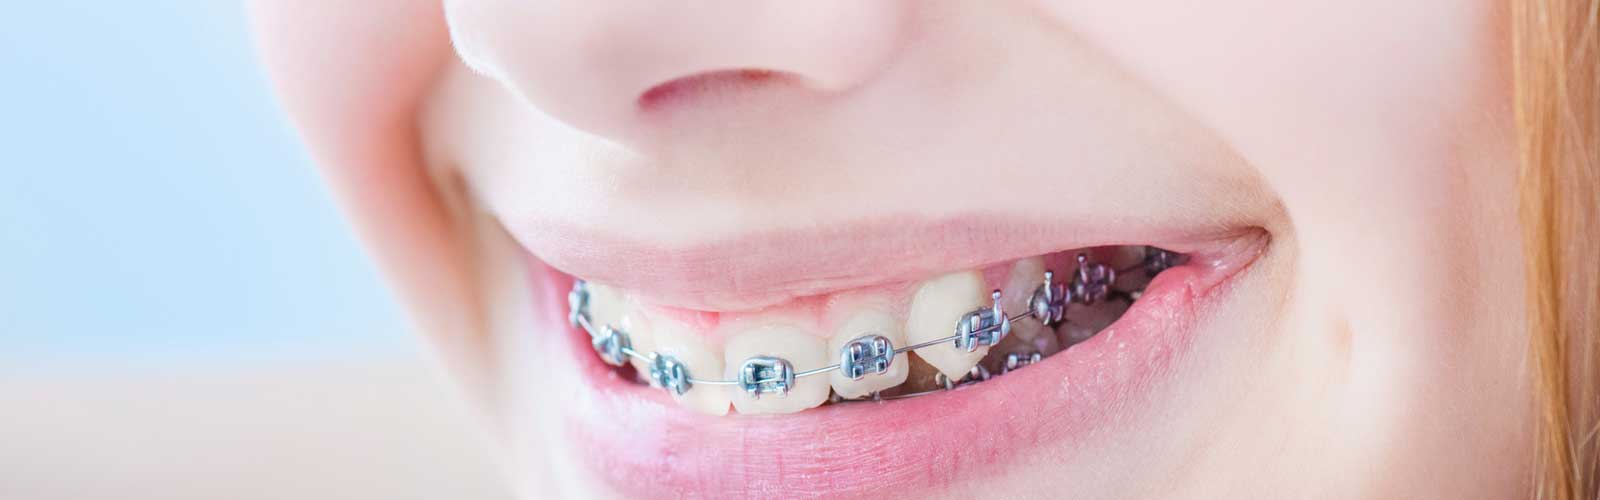 Teeth With Braces Image